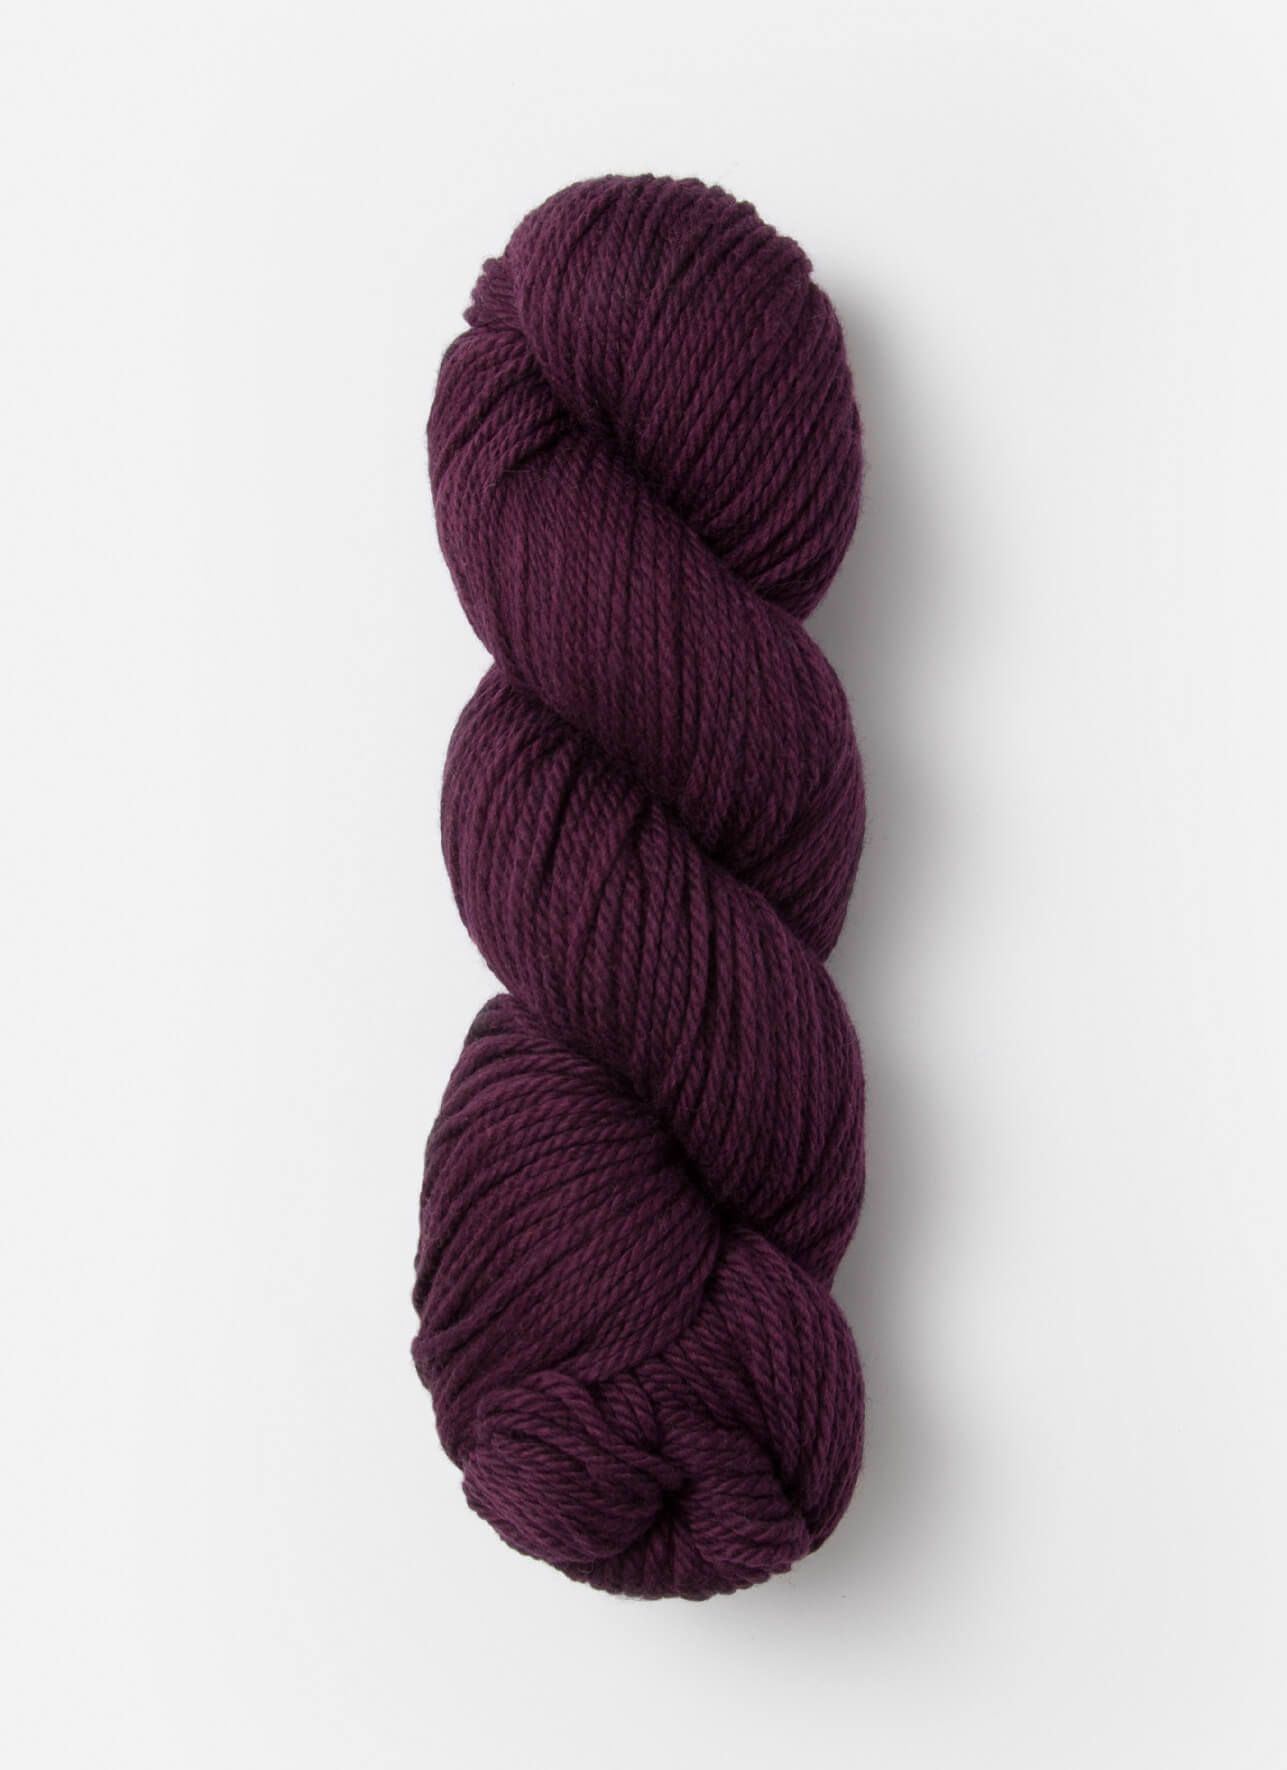 Blue Sky Sweater Yarn 7516 Grape Jelly